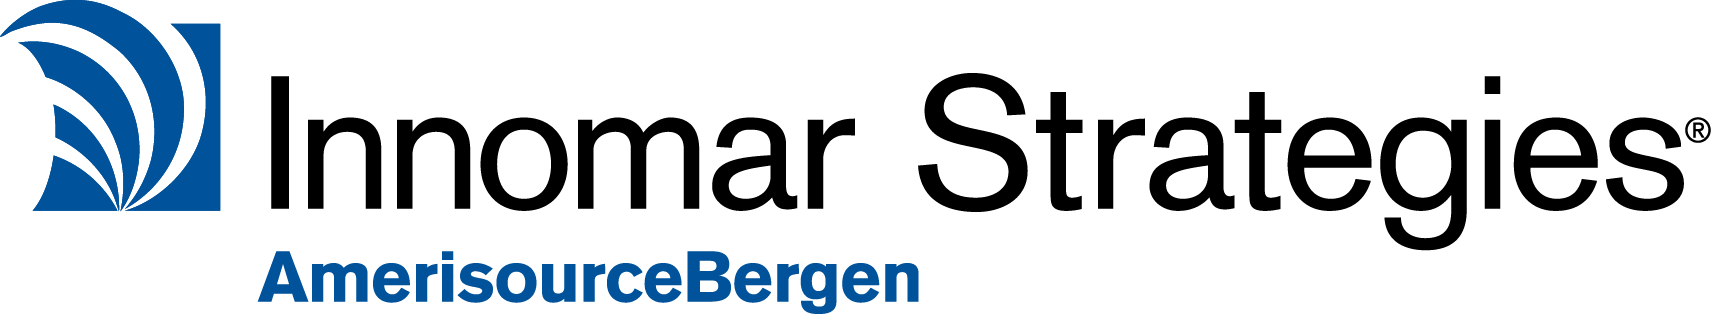 Innomar Strategies logo